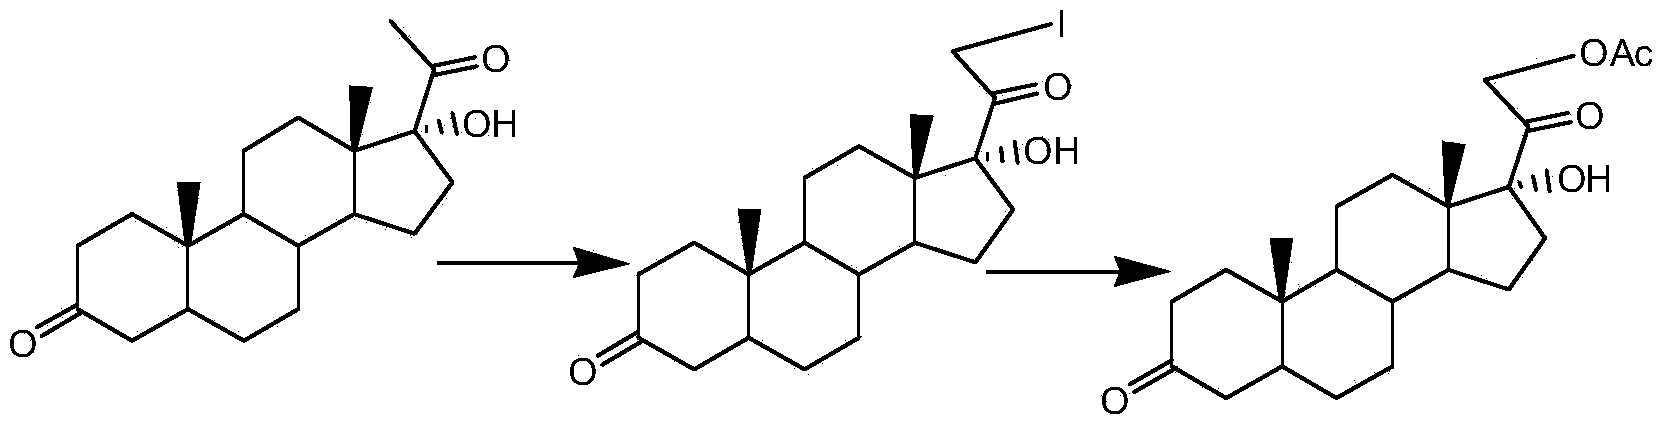 Preparation method of 17hydroxy-pregnane-4-alkene-3,20-diketone-21-acetic ester